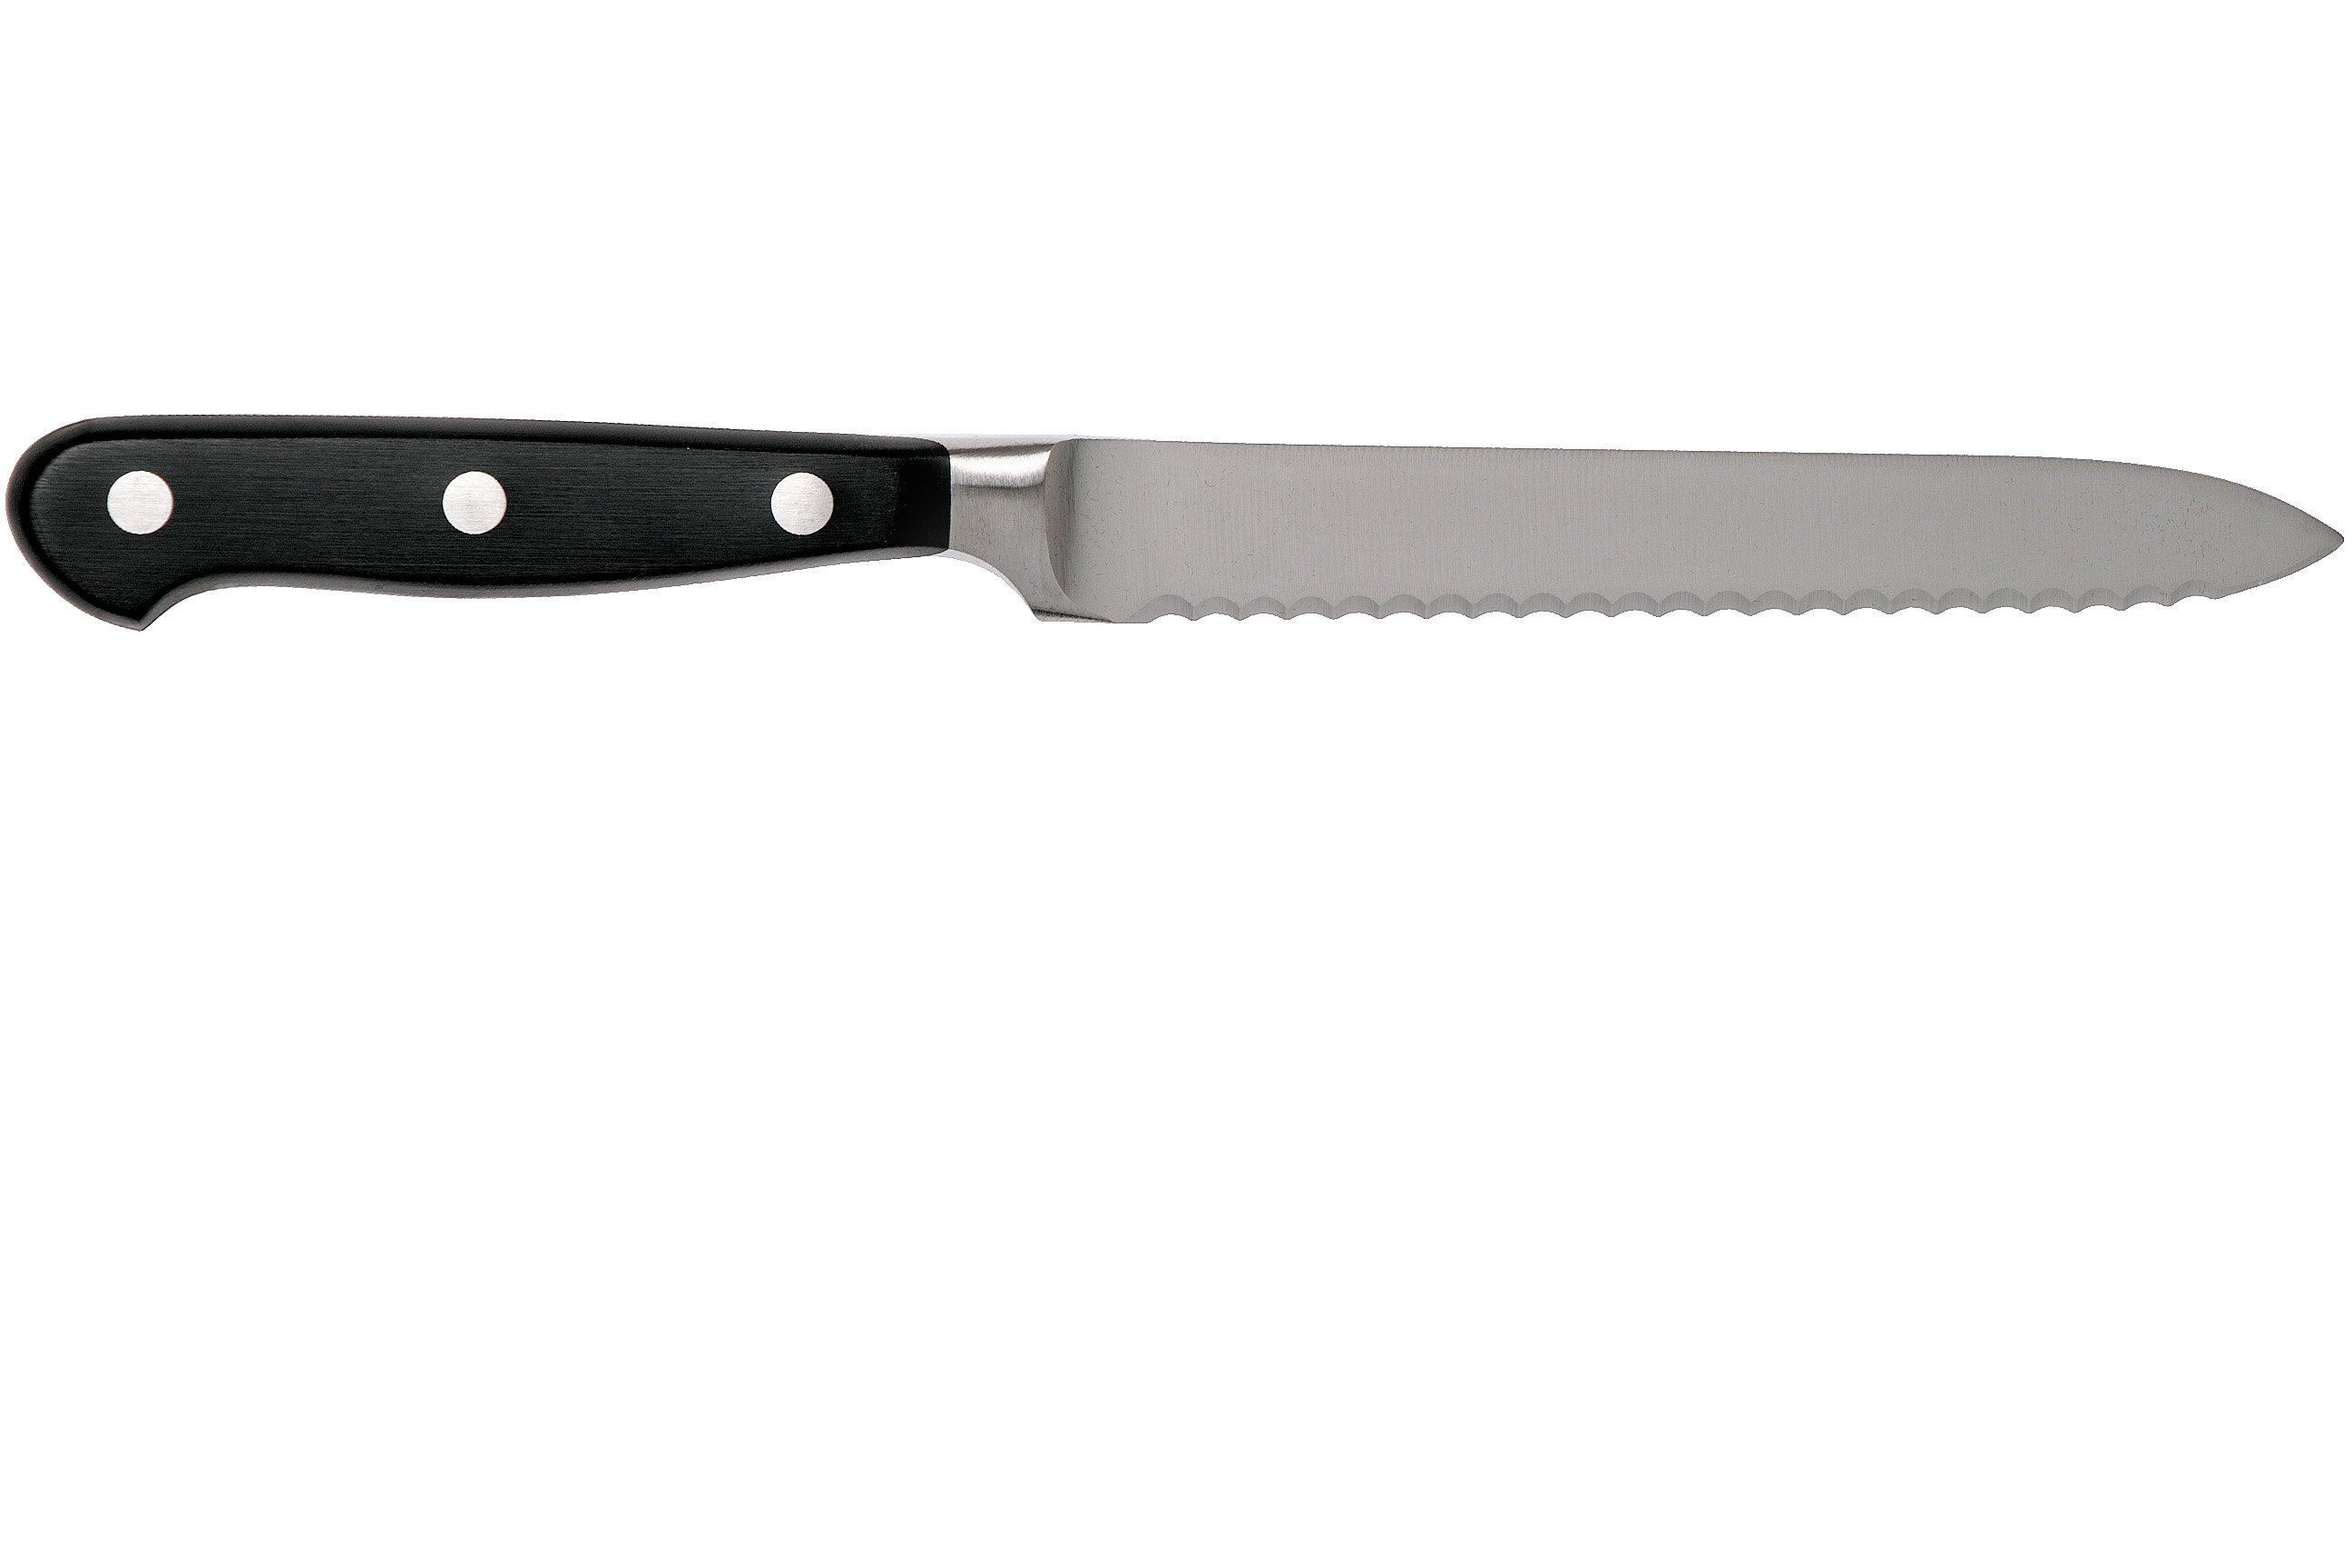 Wüsthof Classic IKON Sausage knife